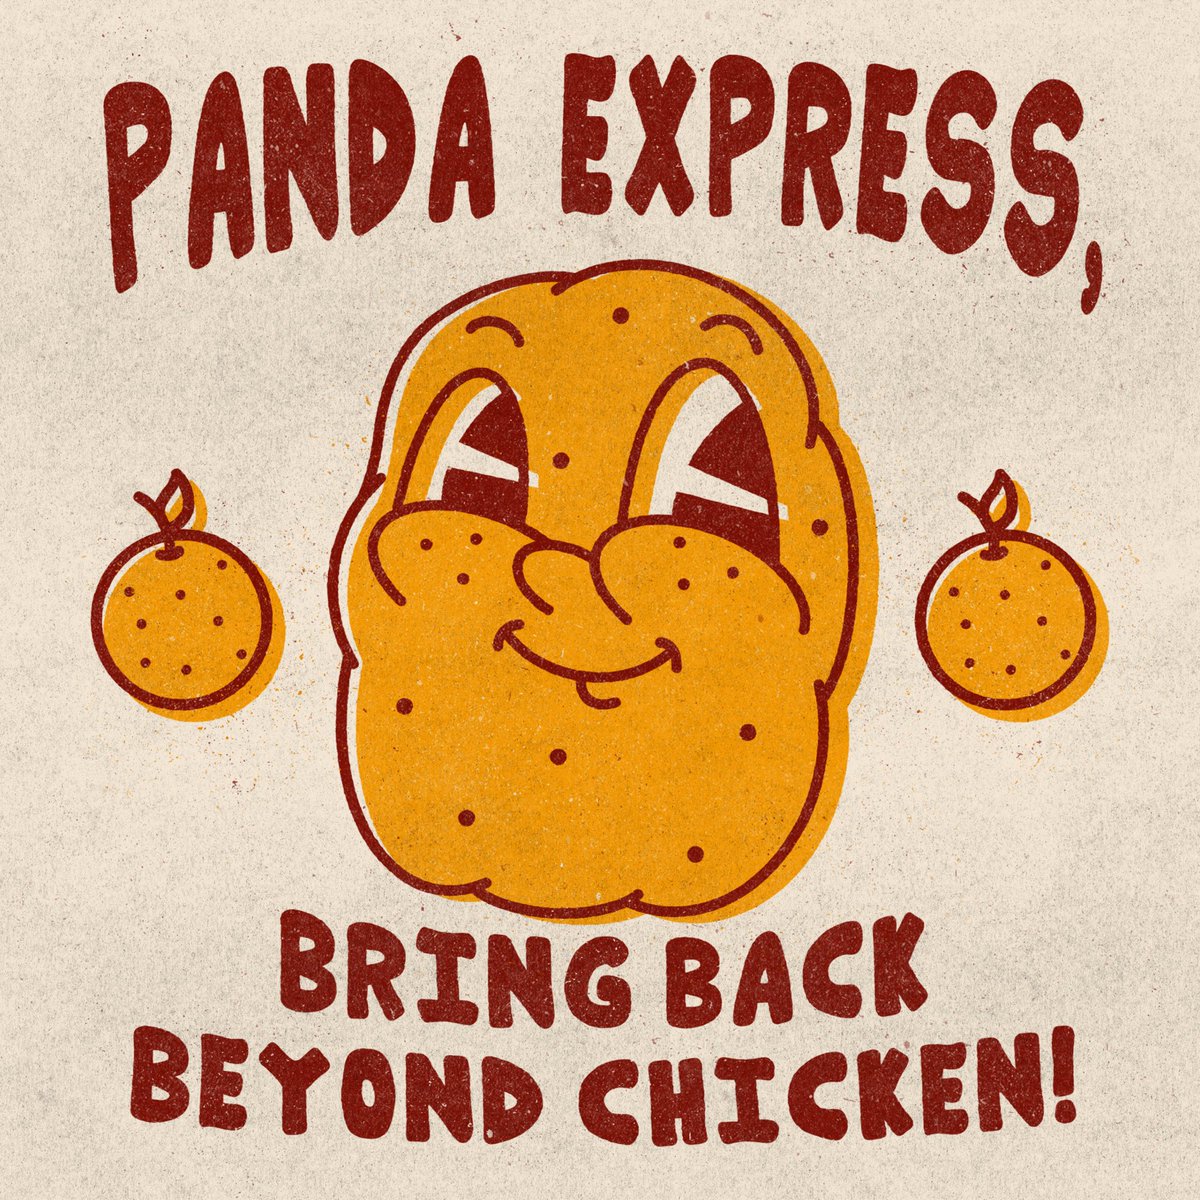 Tag @PandaExpress below if you want to see them bring back @BeyondMeat orange chicken and keep it permanently on the menu! #vegan #vegantwitter